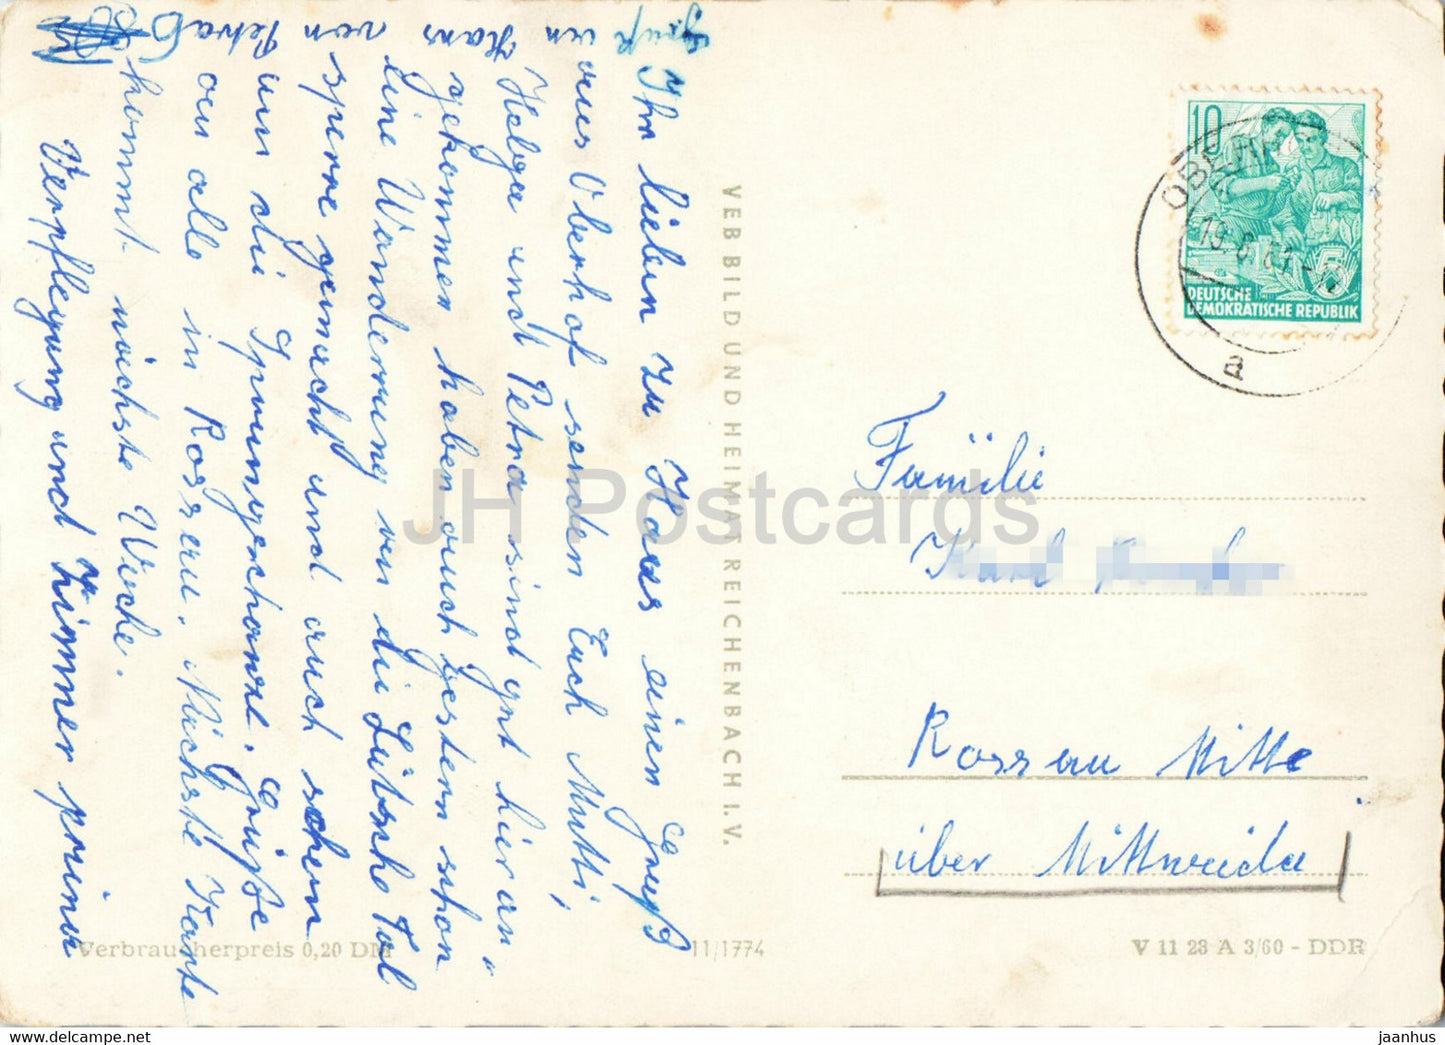 Oberhof - Kurort der Werktatigen - Thuringen Schanze - Ski Jumping hill - old postcard - 1961 - Germany DDR - used